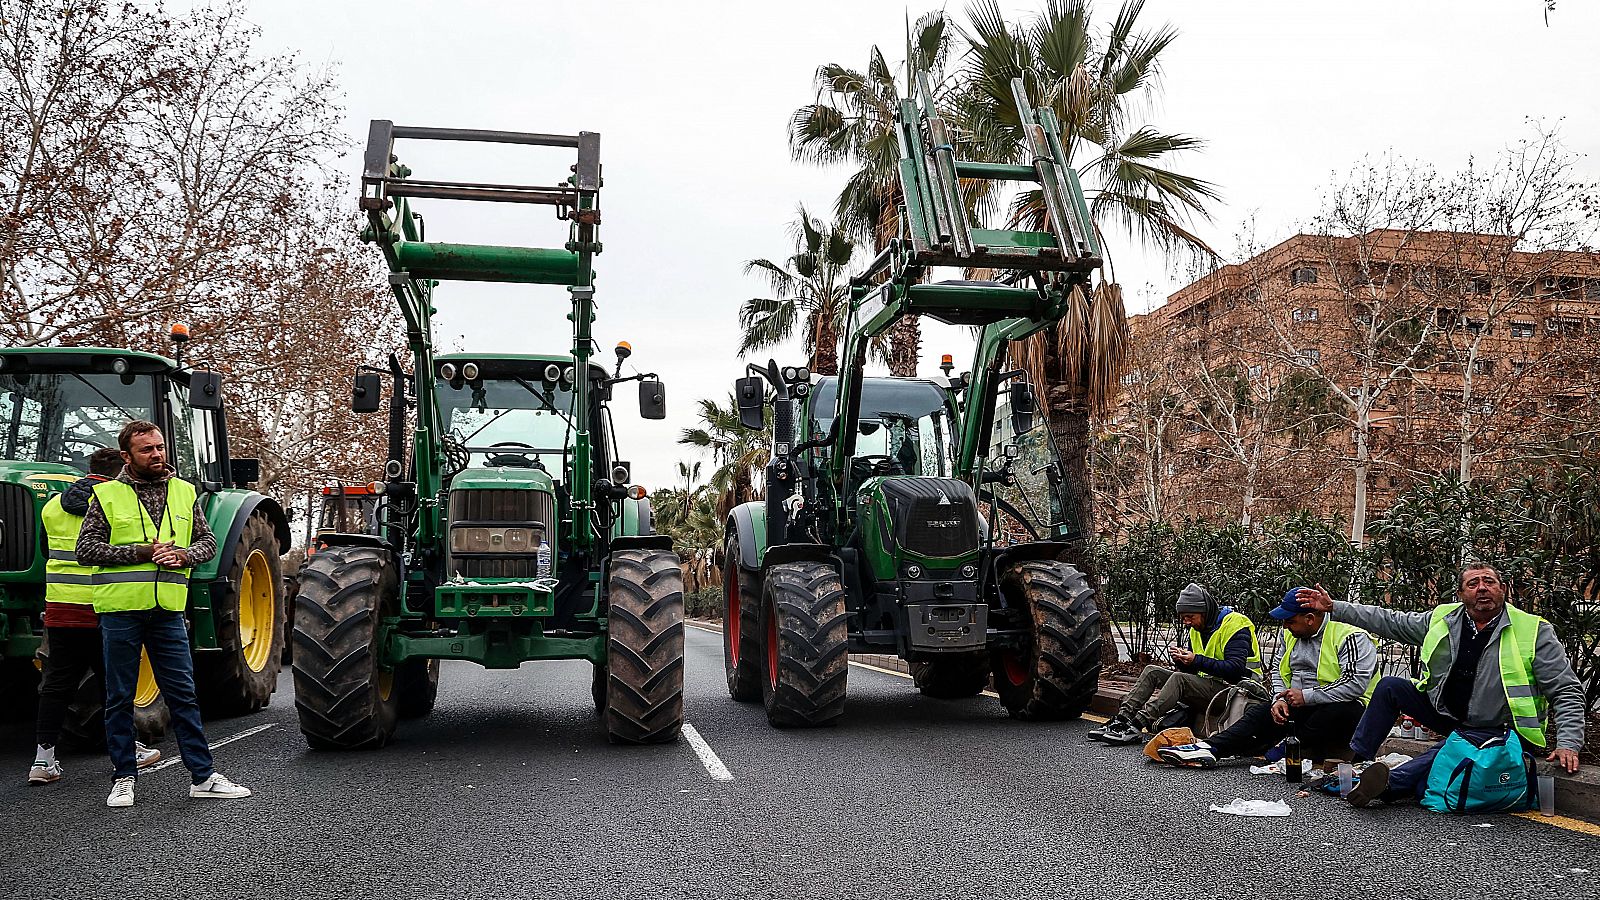 Huelga de agricultores: Protestas con tractores en toda España